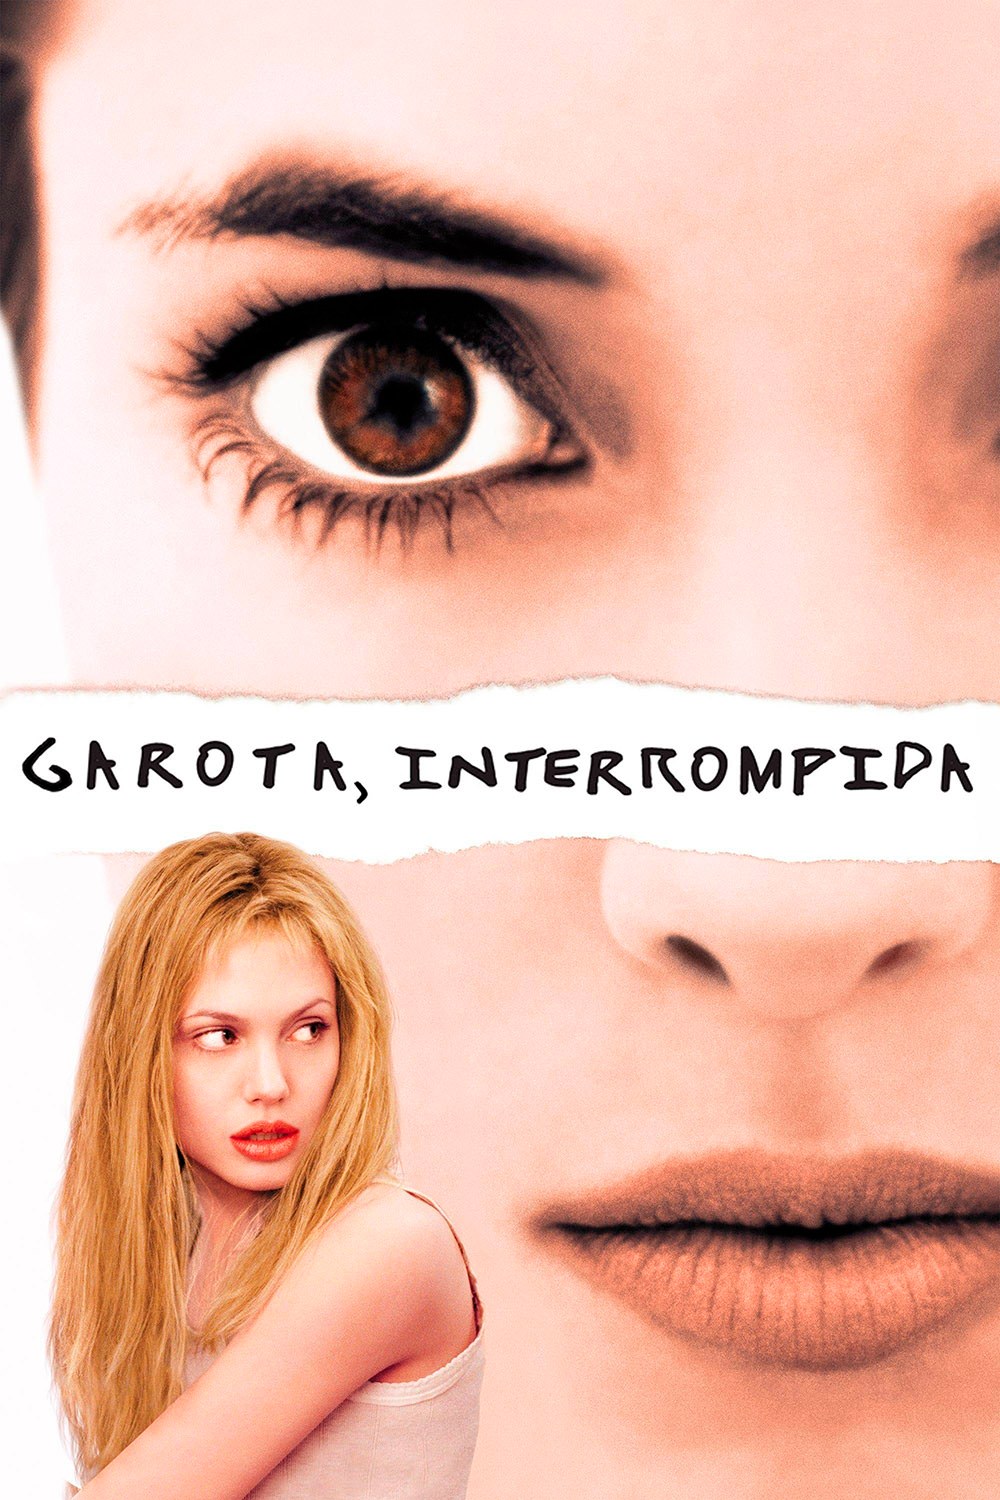 Filmes-1999-GarotaInterrompida-Posteres-001.jpg